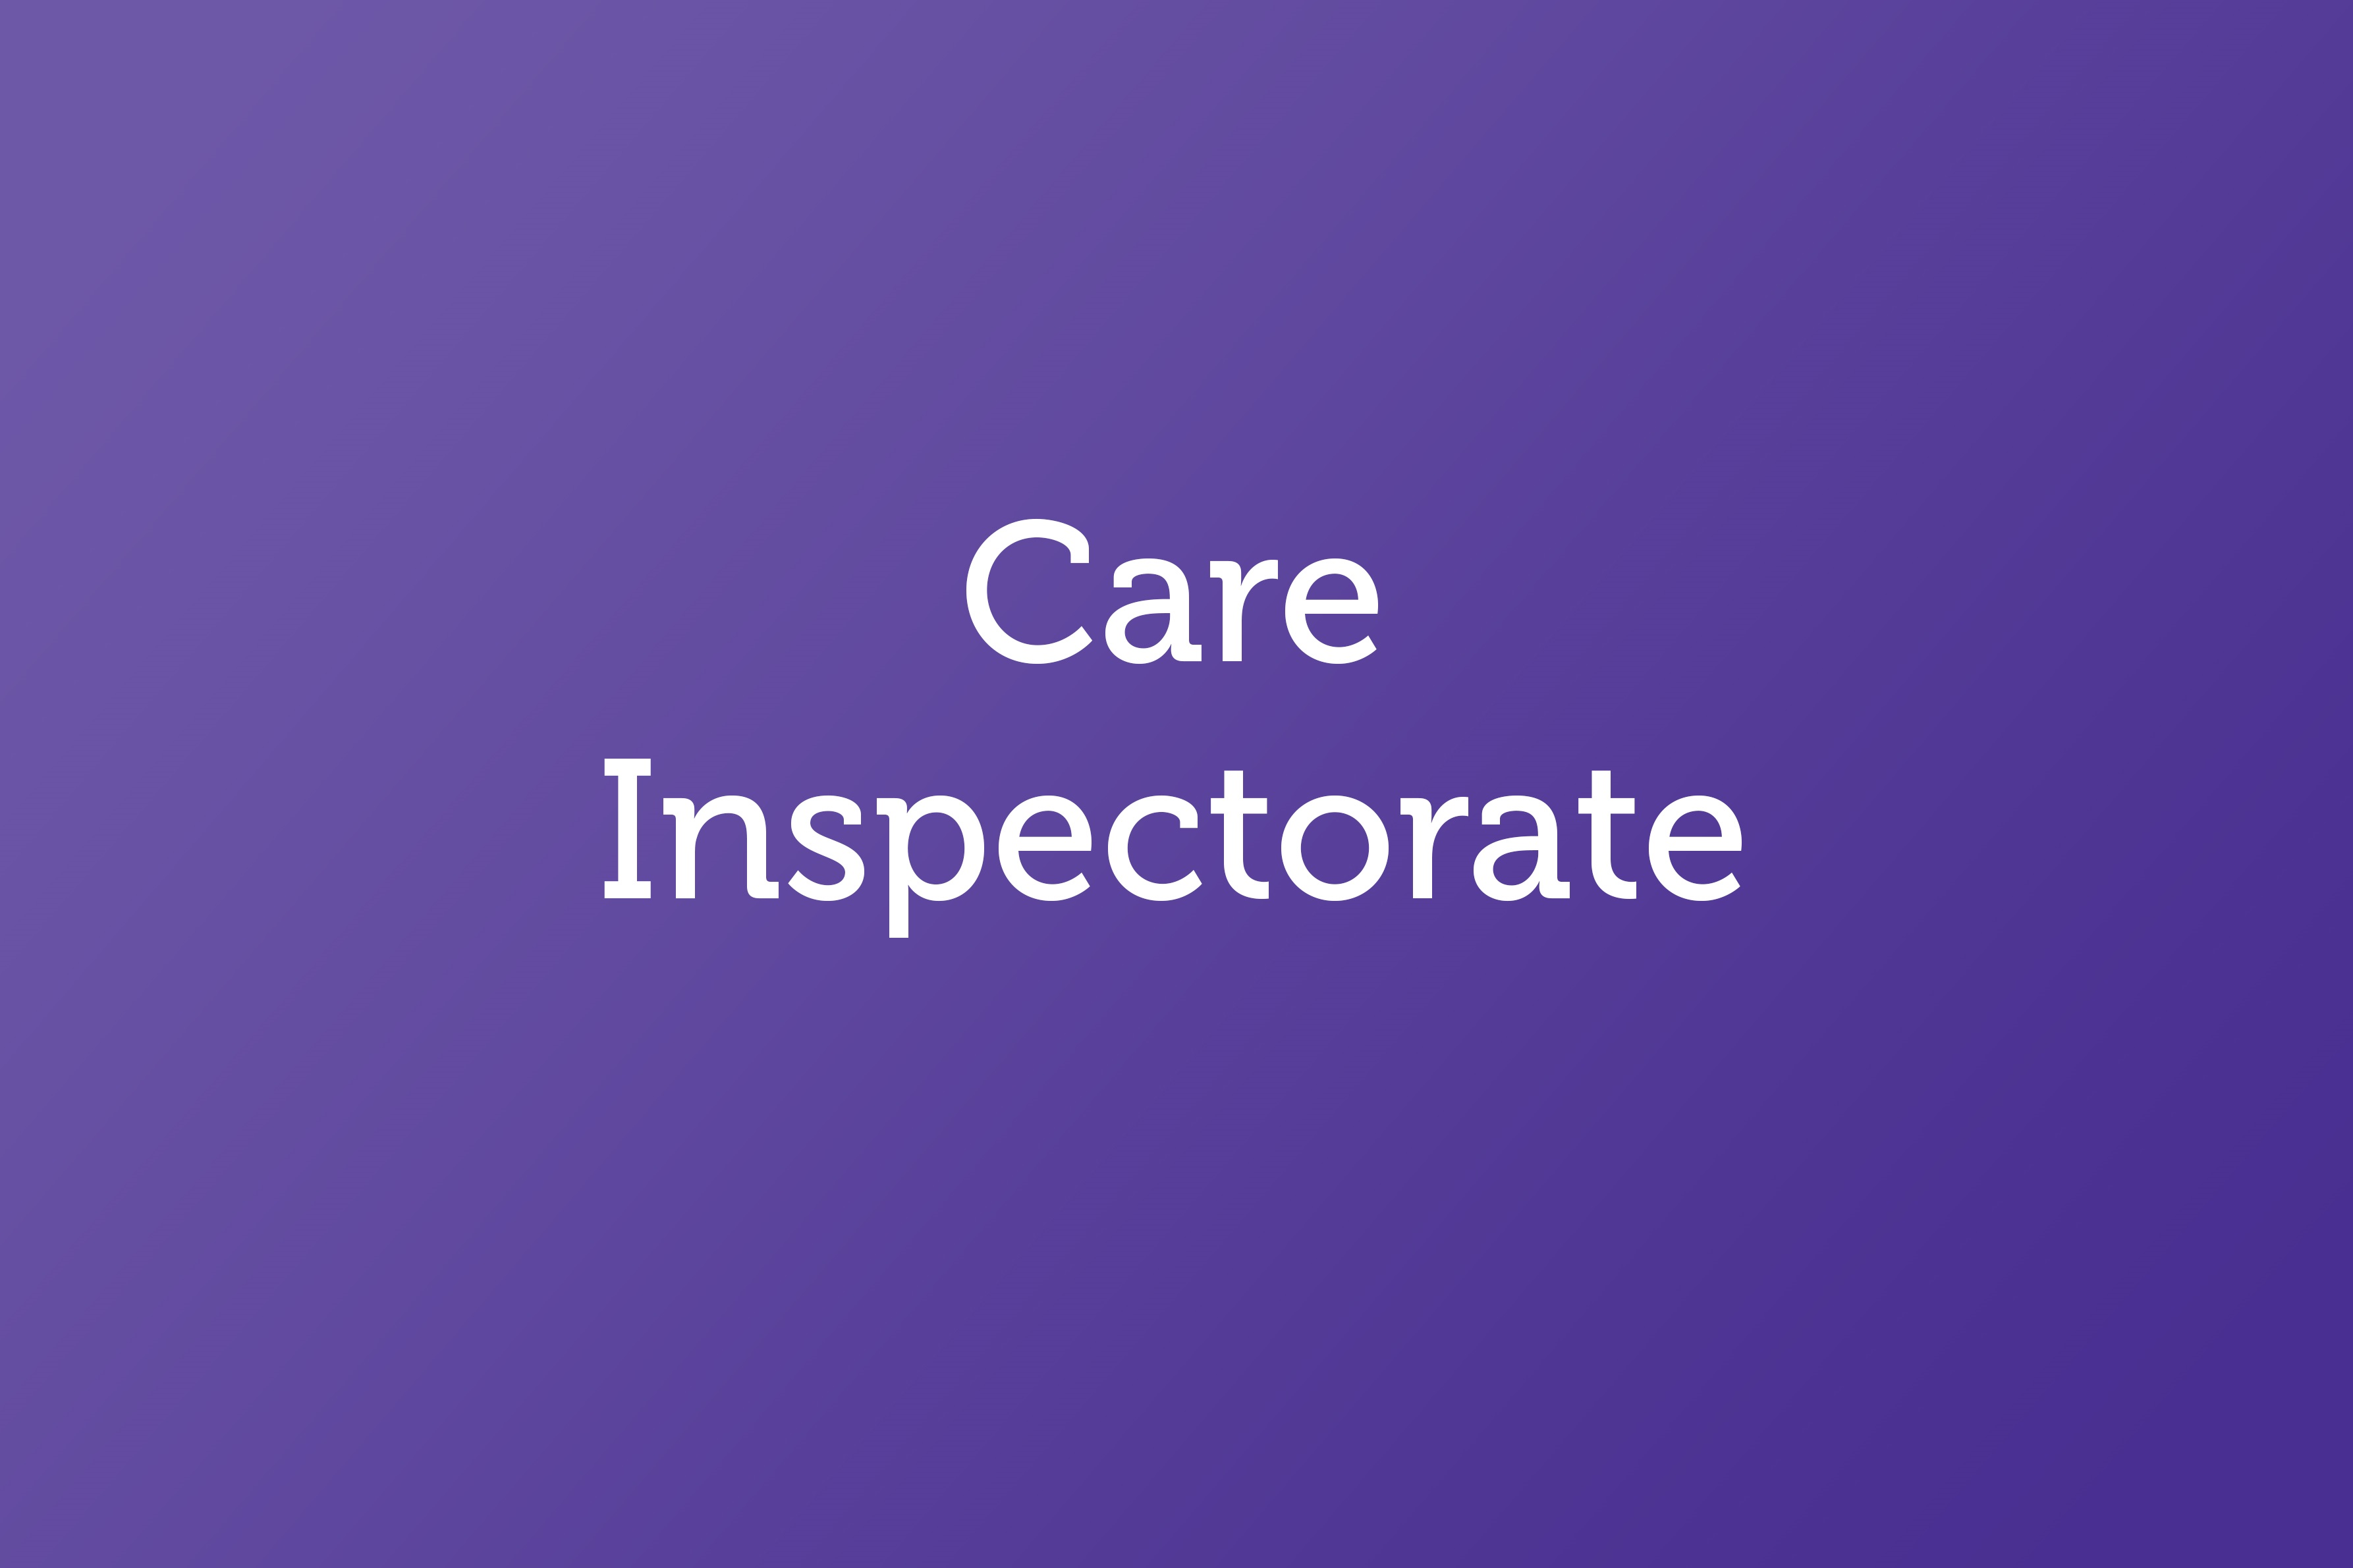 We’re hiring inspectors